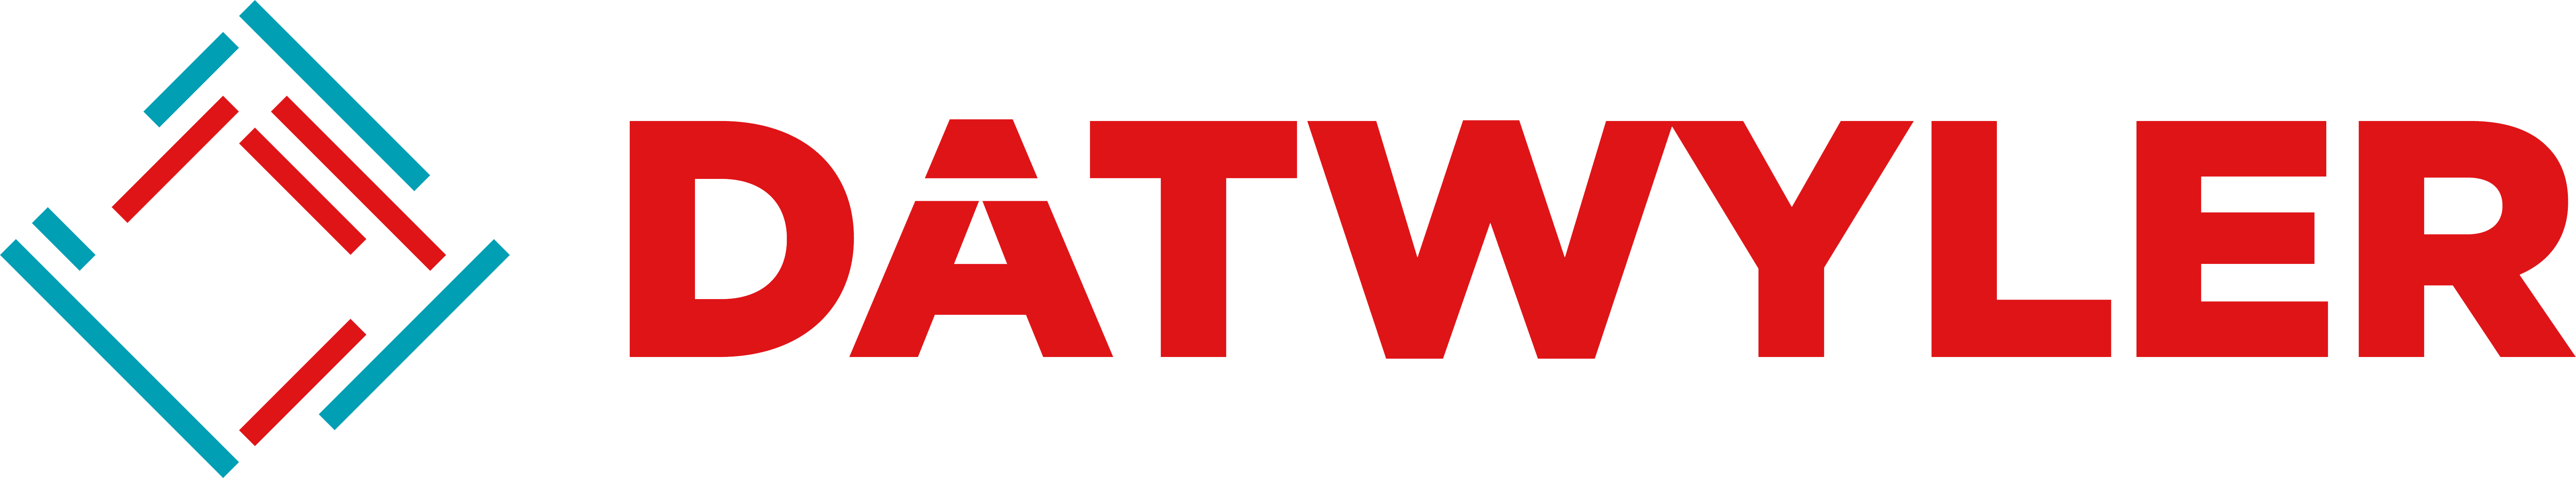 Datwyler_Logo